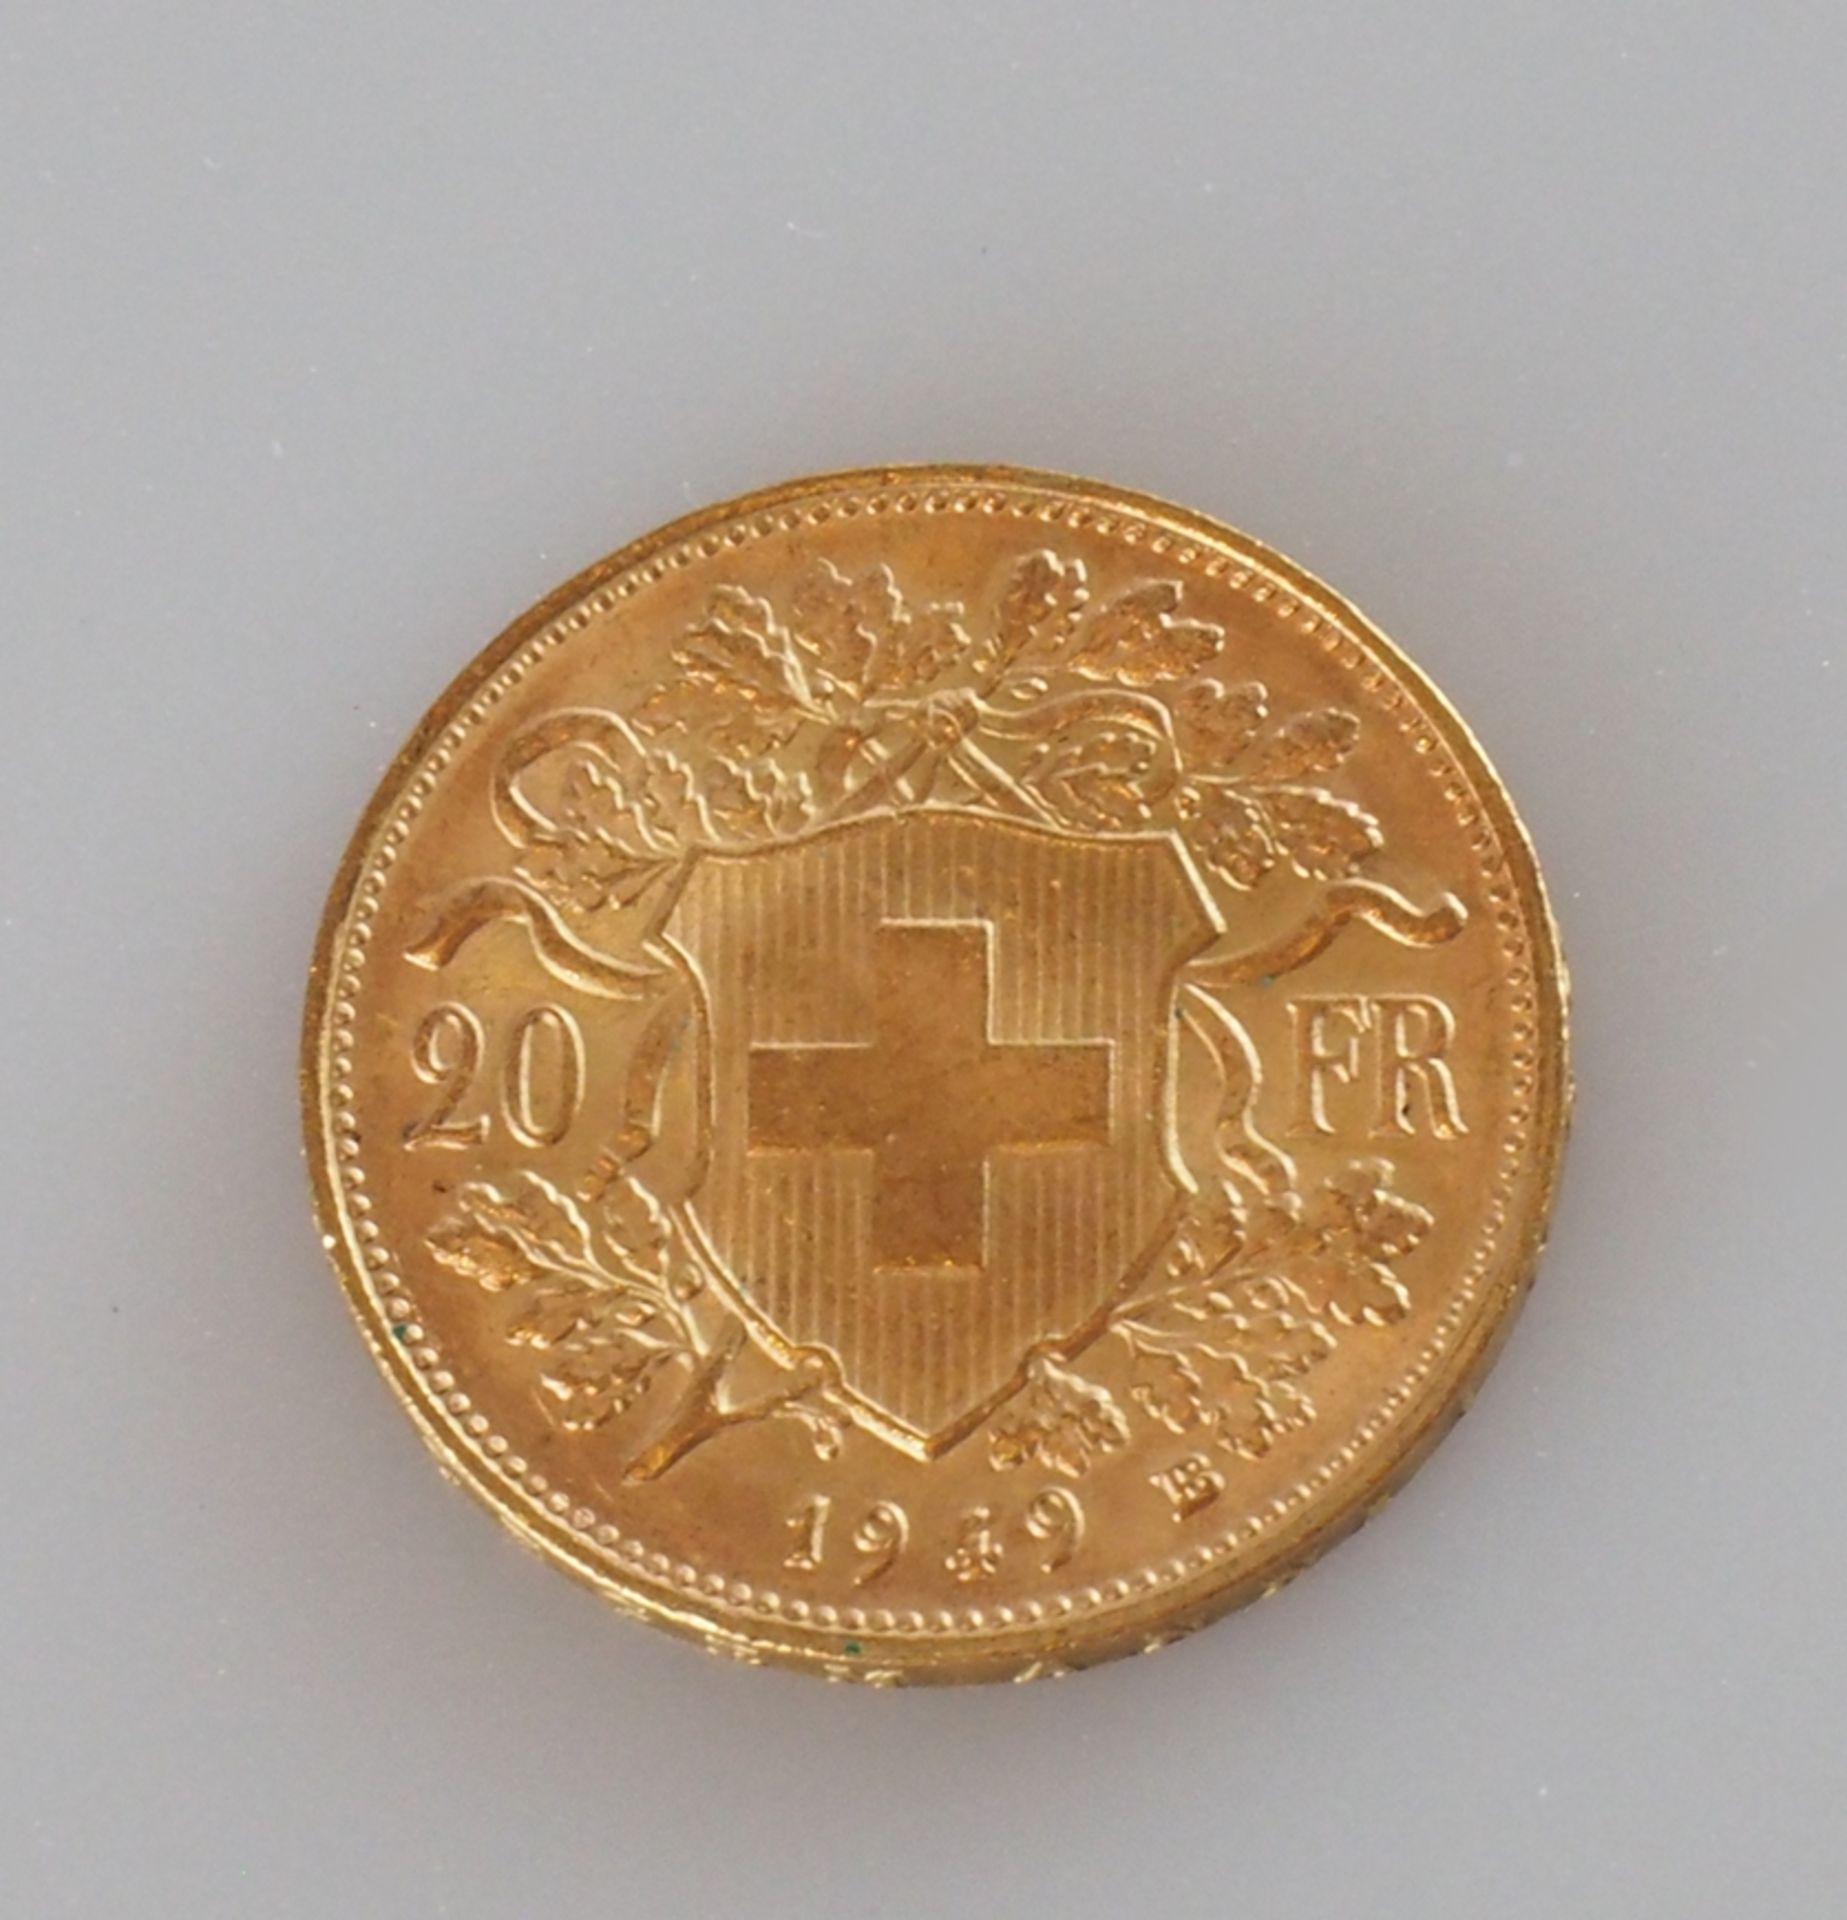 Goldmünze Schweiz. 20 Franken 1949 - Bild 2 aus 2